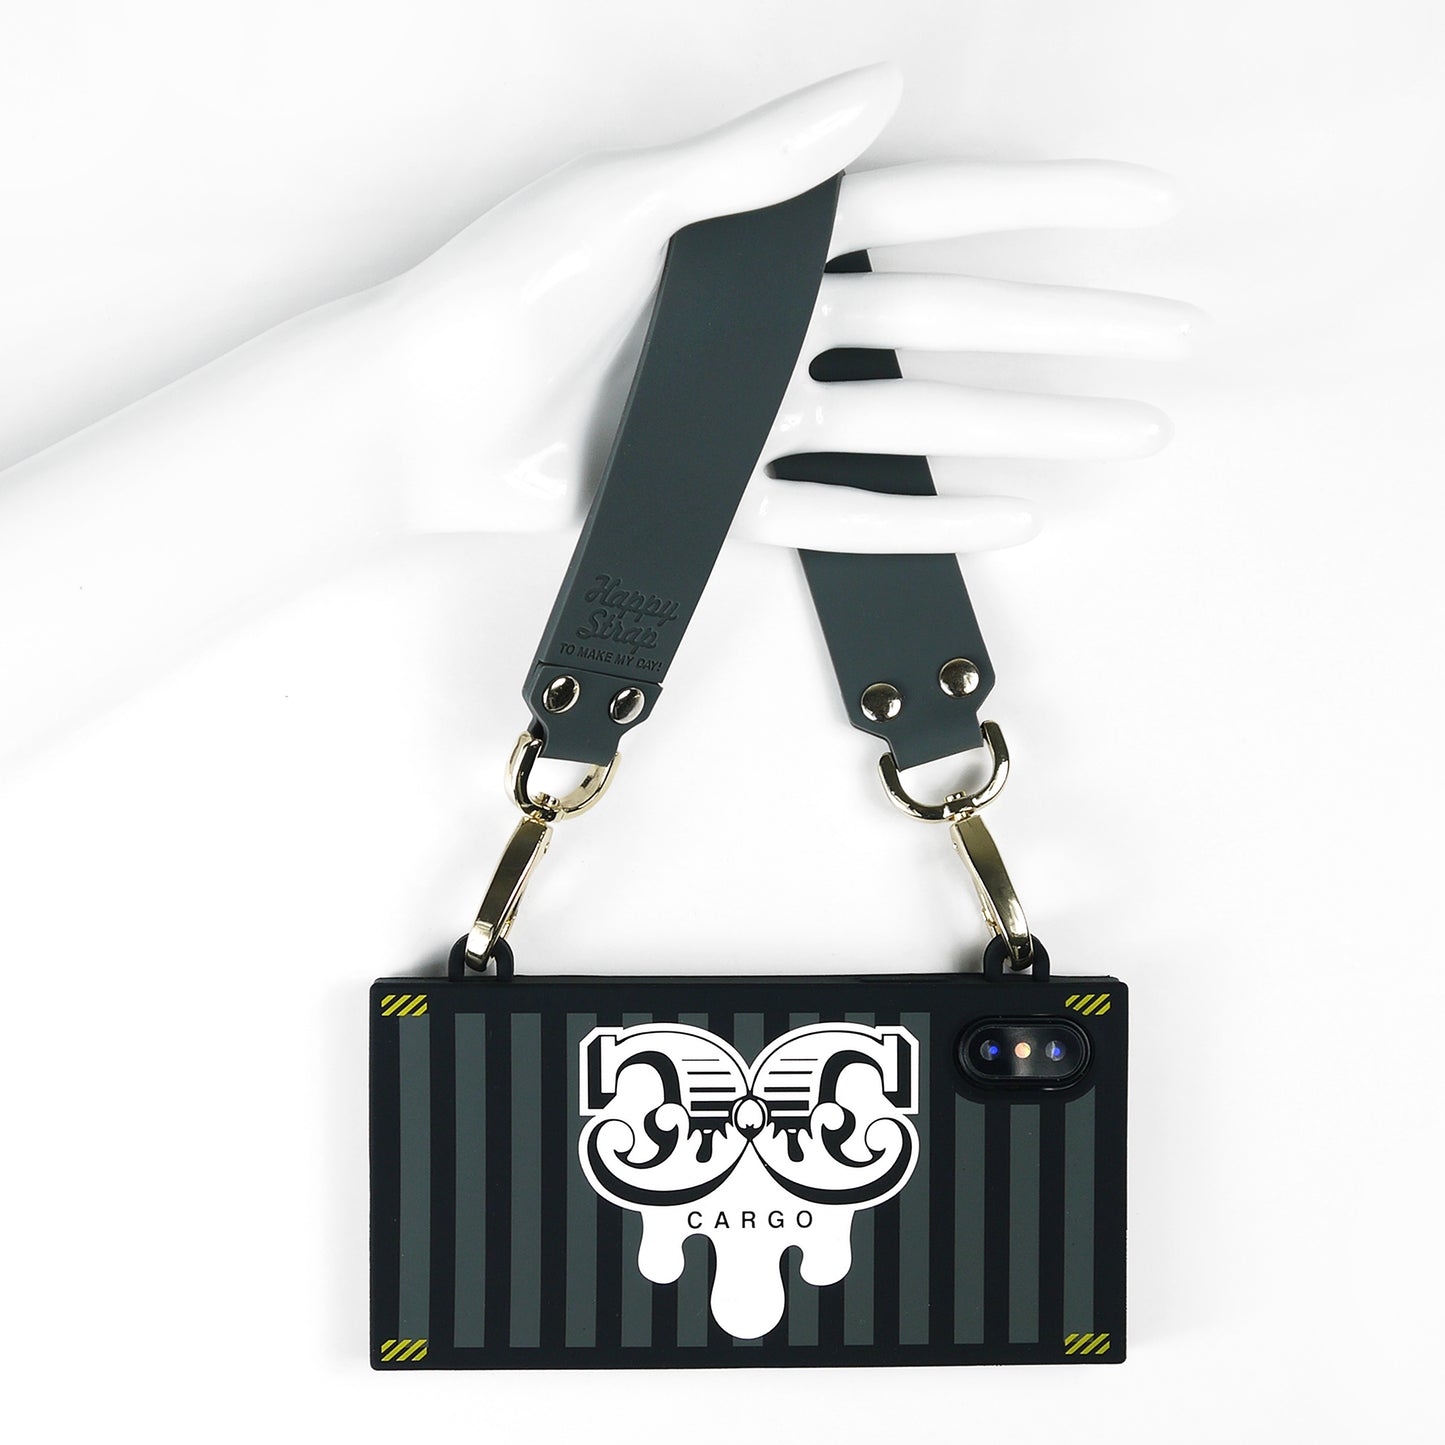 iPhone X/Xs Case - Candies Handbag